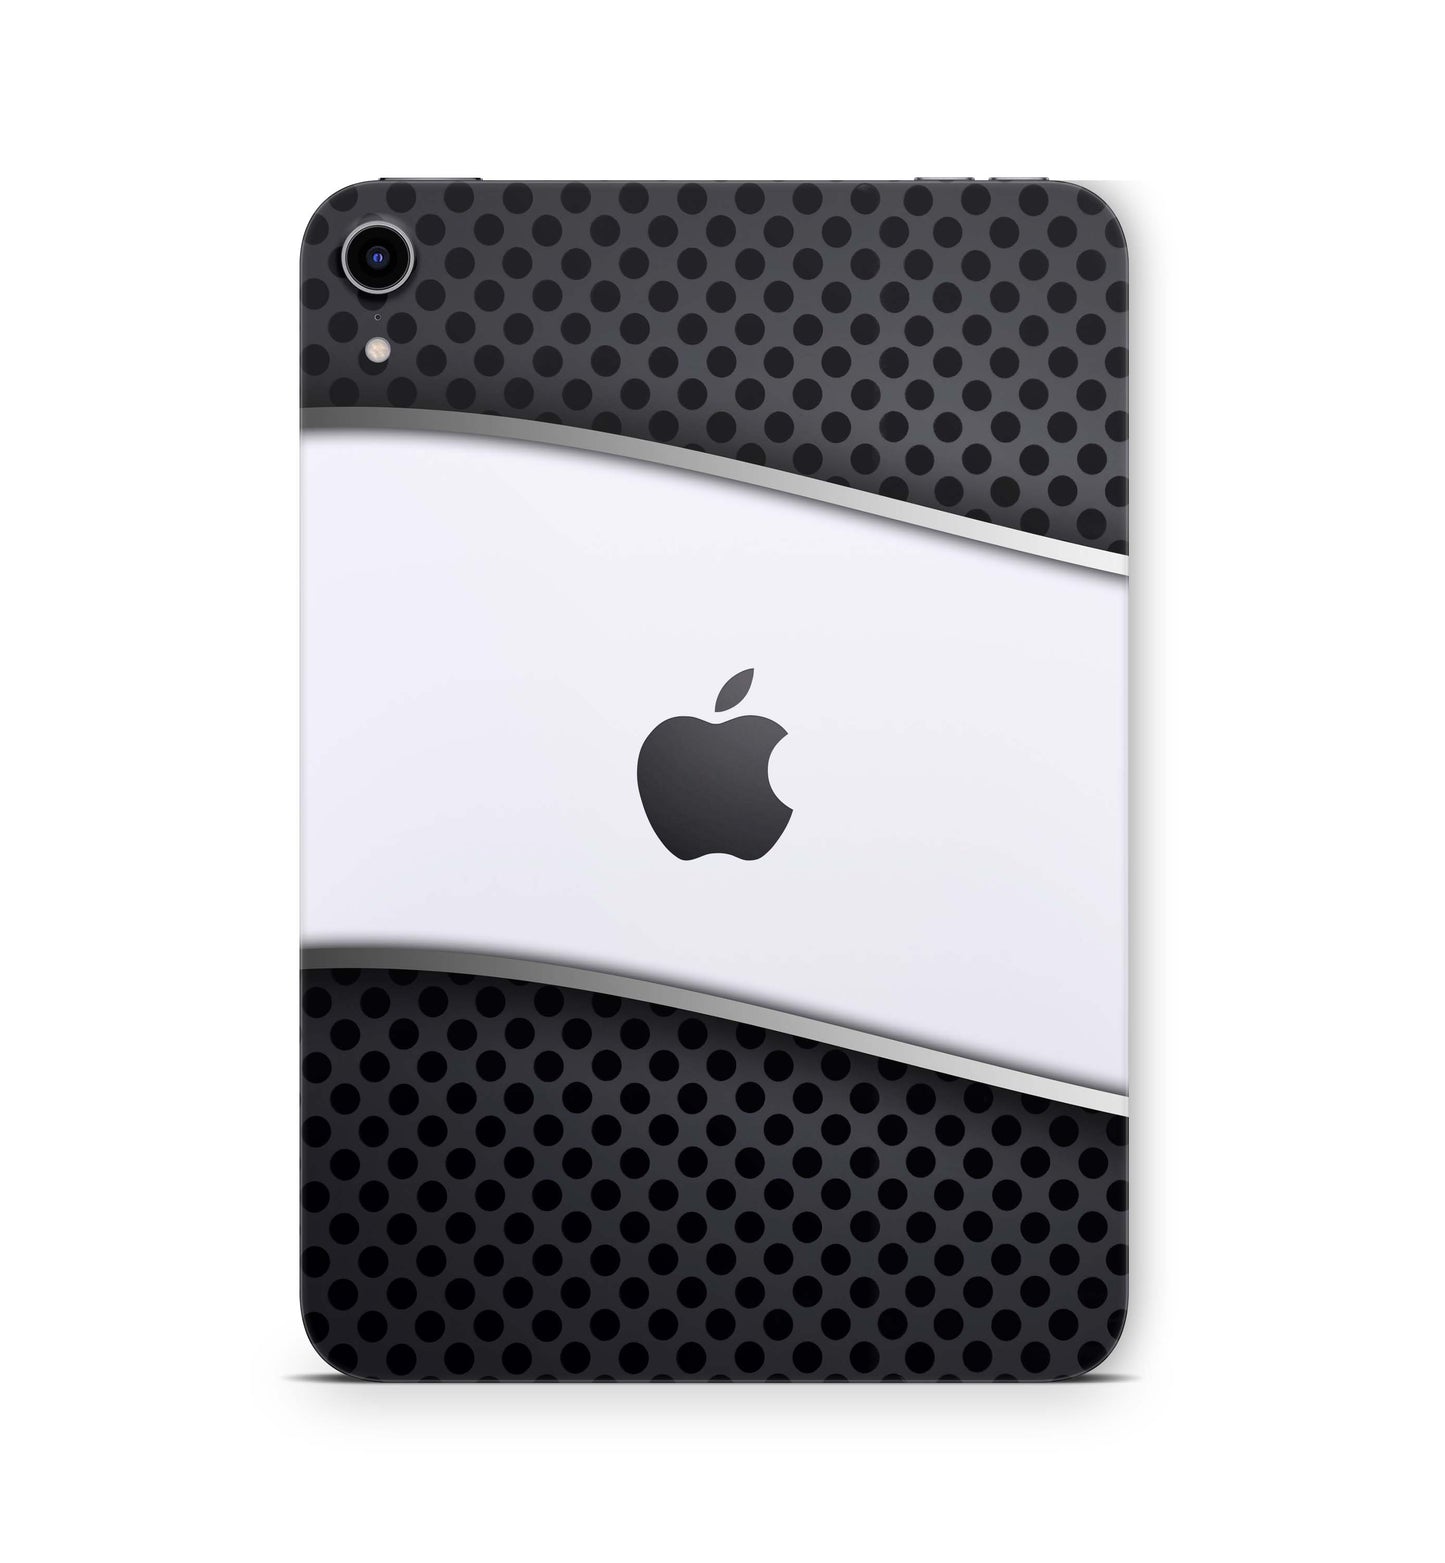 iPad Mini Skin Design Cover Folie Vinyl Skins & Wraps für alle iPad Mini Modelle Aufkleber Skins4u Metal-Stripe  